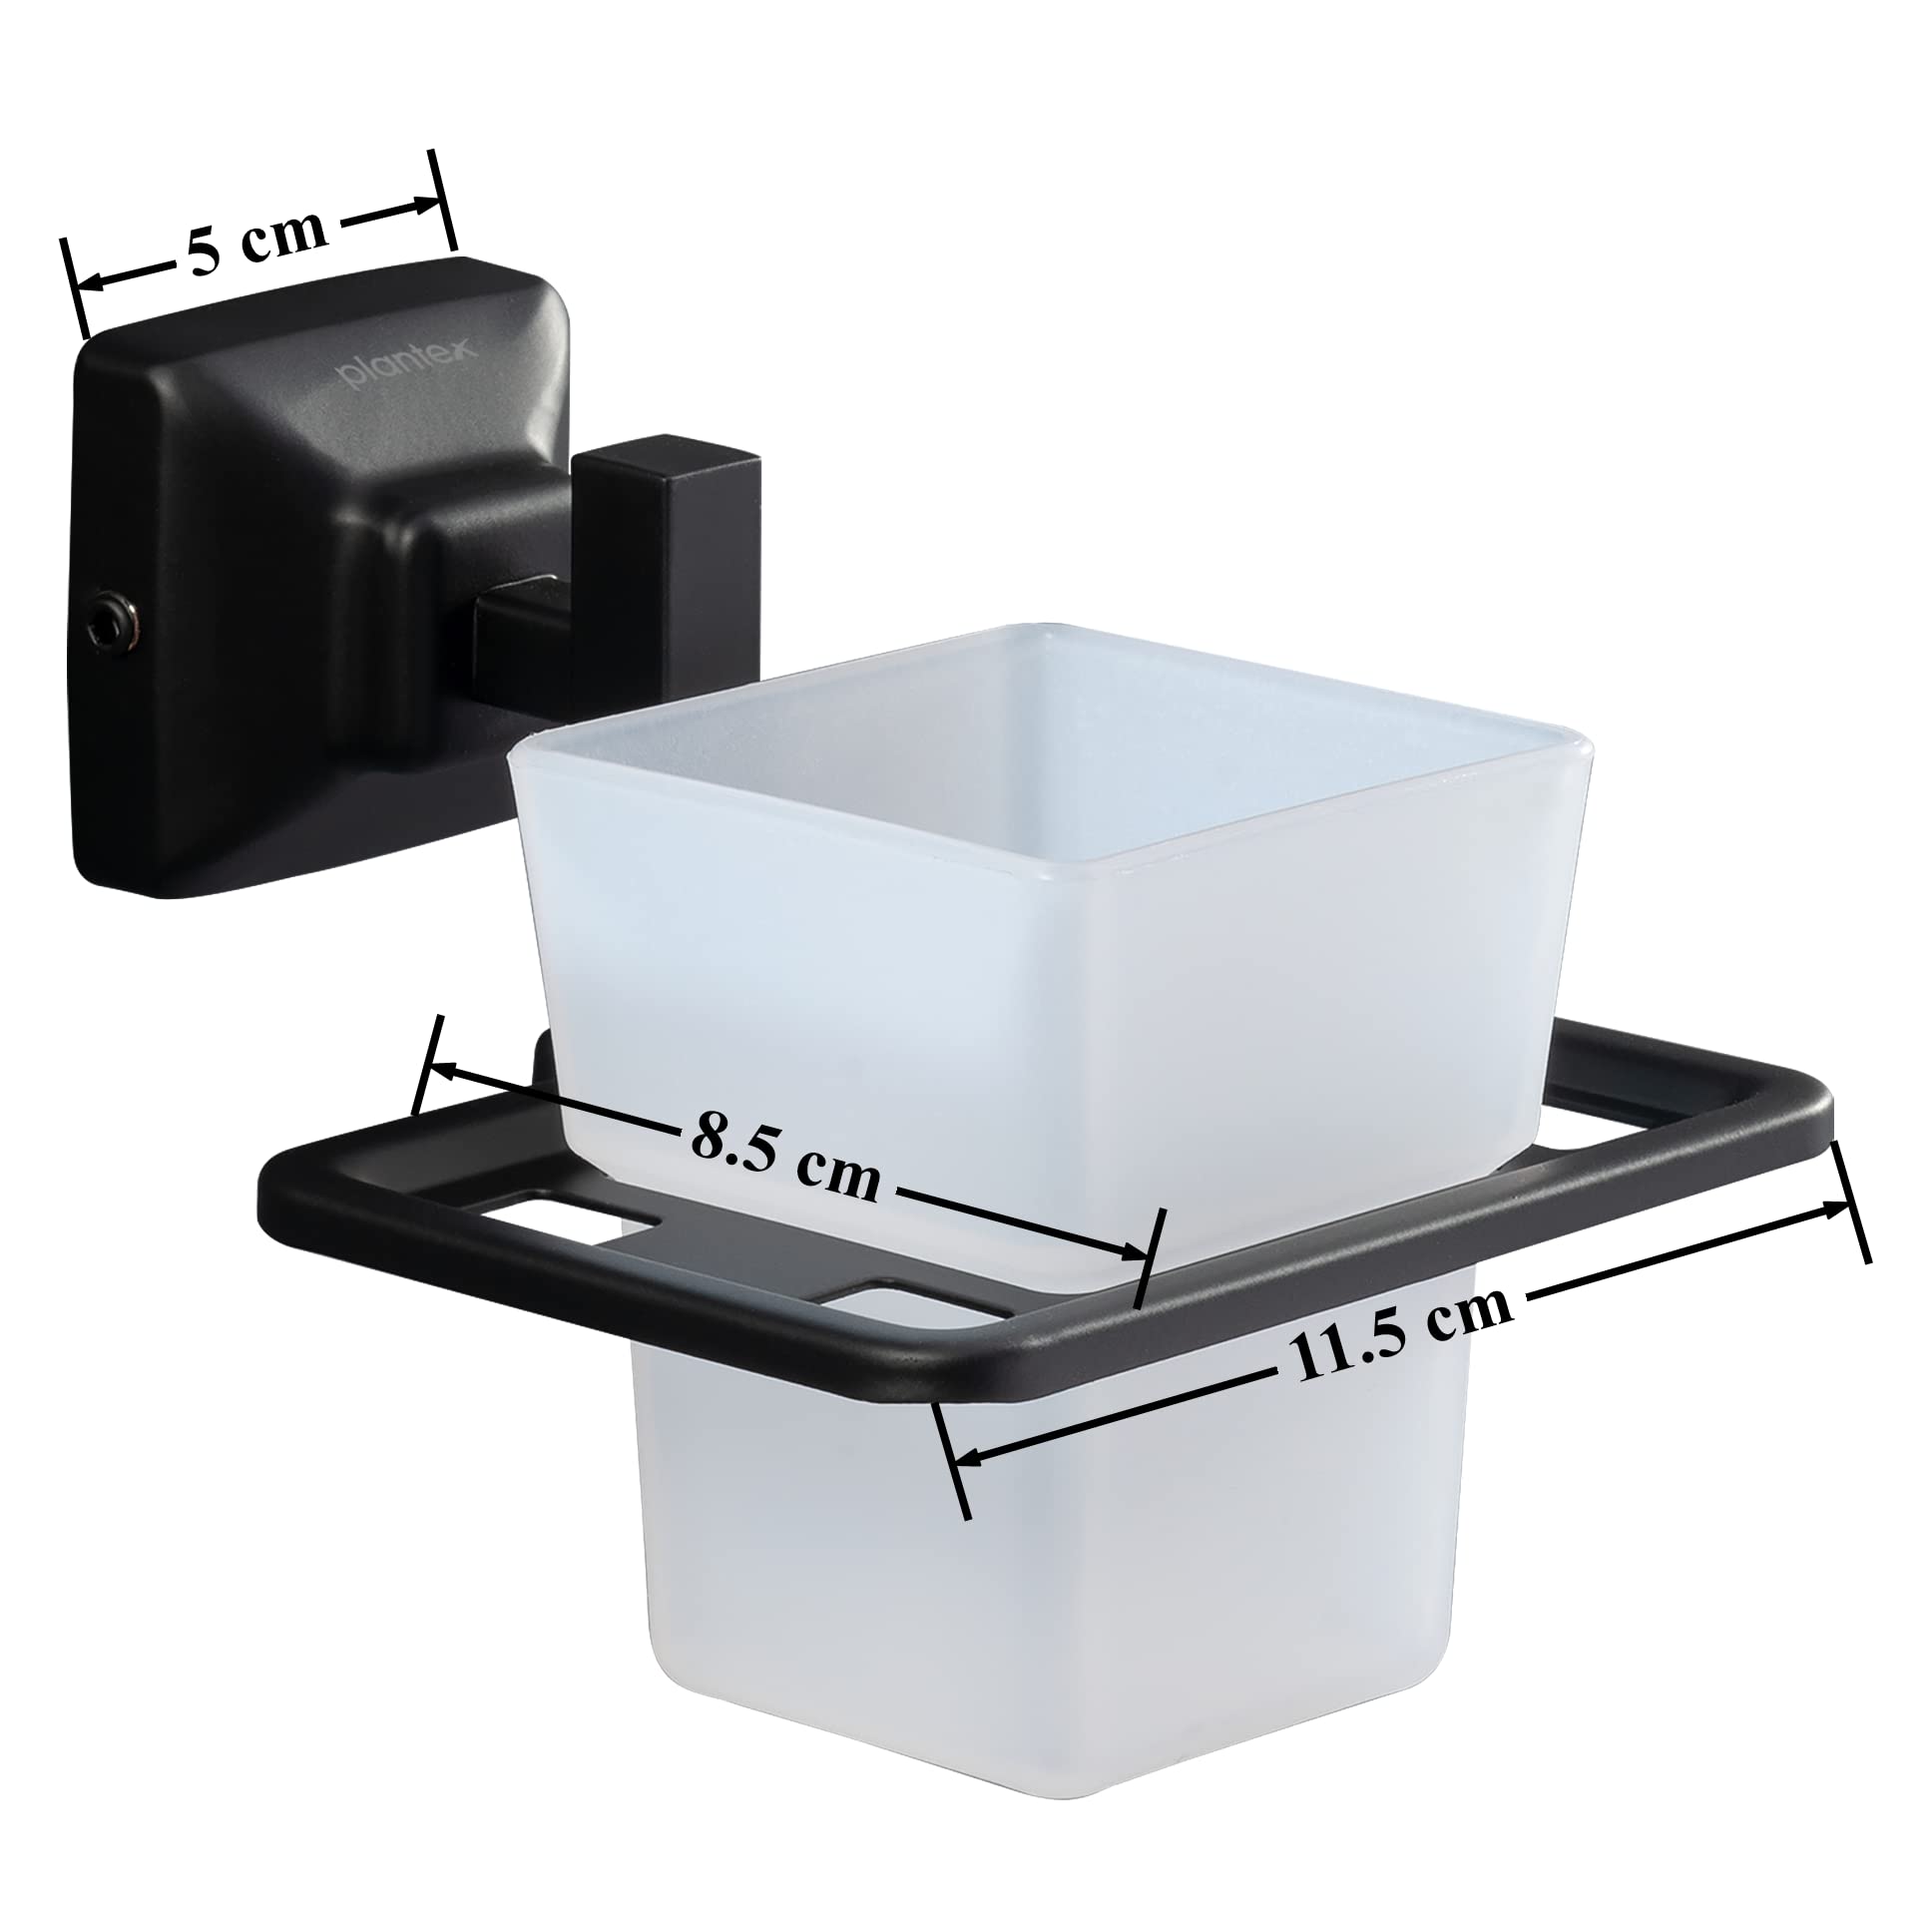 Plantex Stainless Steel 304 Grade Squaro Tumbler Holder/Tooth Brush Holder/Bathroom Accessories (Black) - Pack of 1